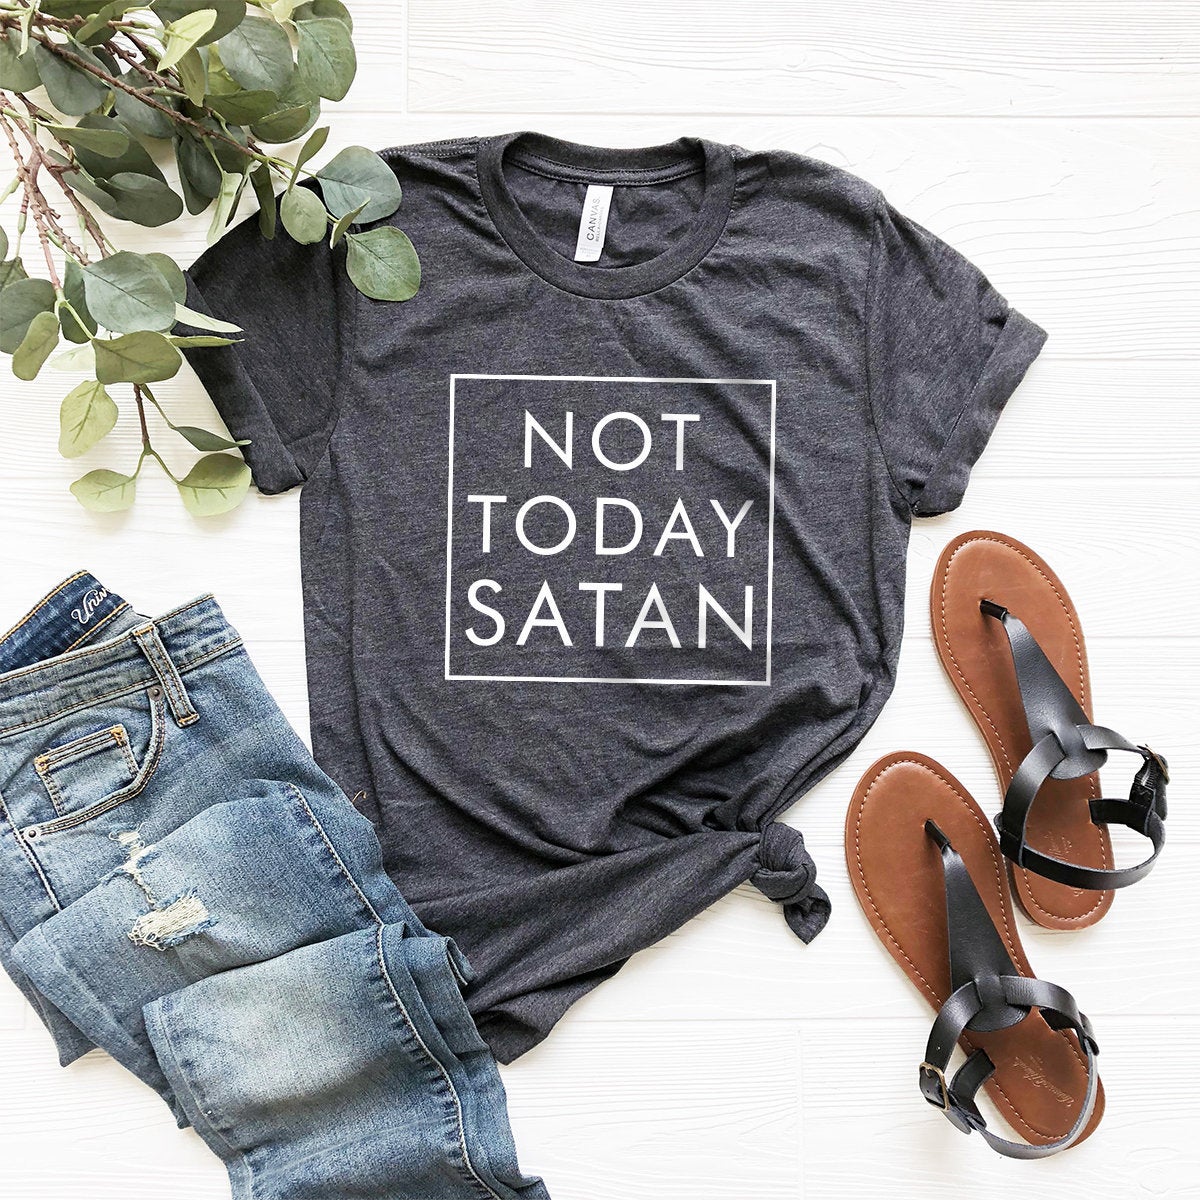 Not Today Satan Shirt, Christian T-Shirt, Faith Shirt, Jesus Clothing, Church Tee, Faith Based Shirt, Religious Shirt, Jesus Shirt - Fastdeliverytees.com